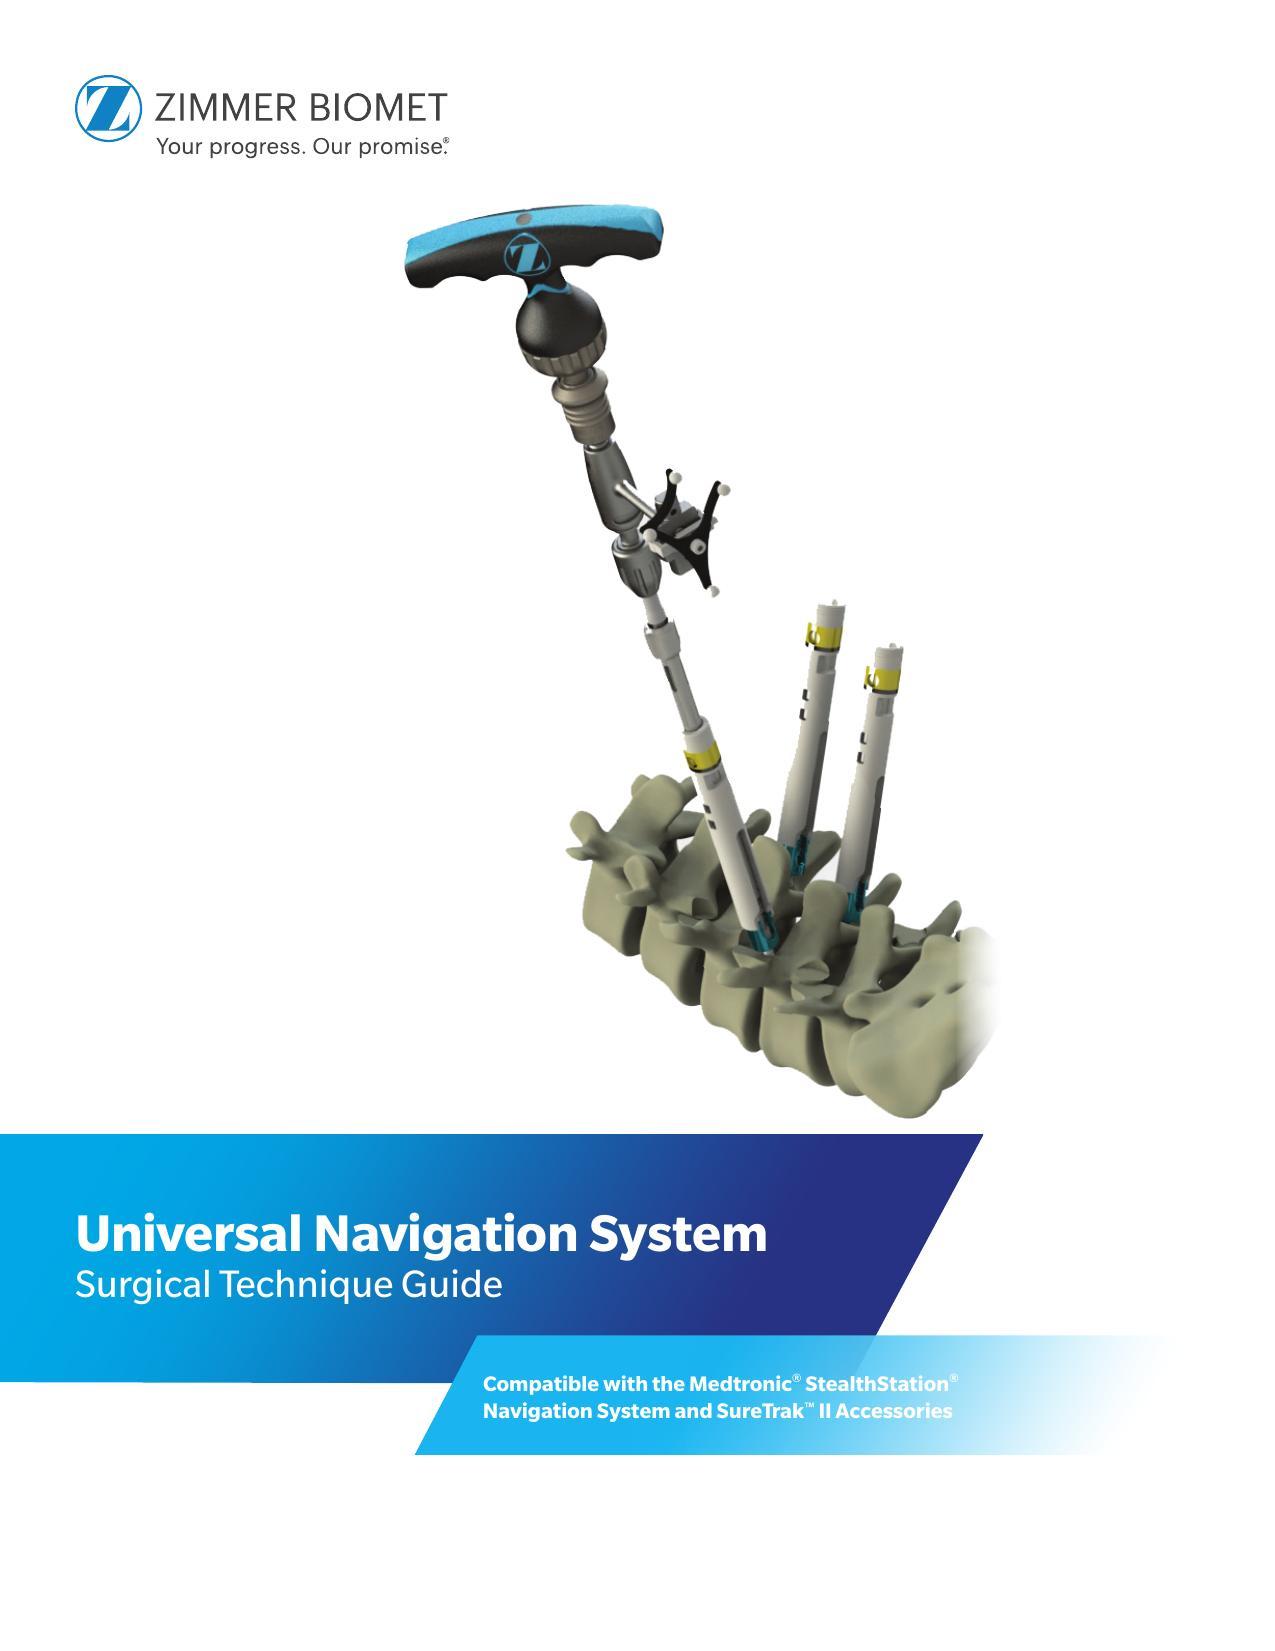 zimmer-biomet-universal-navigation-system-surgical-technique-guide.pdf